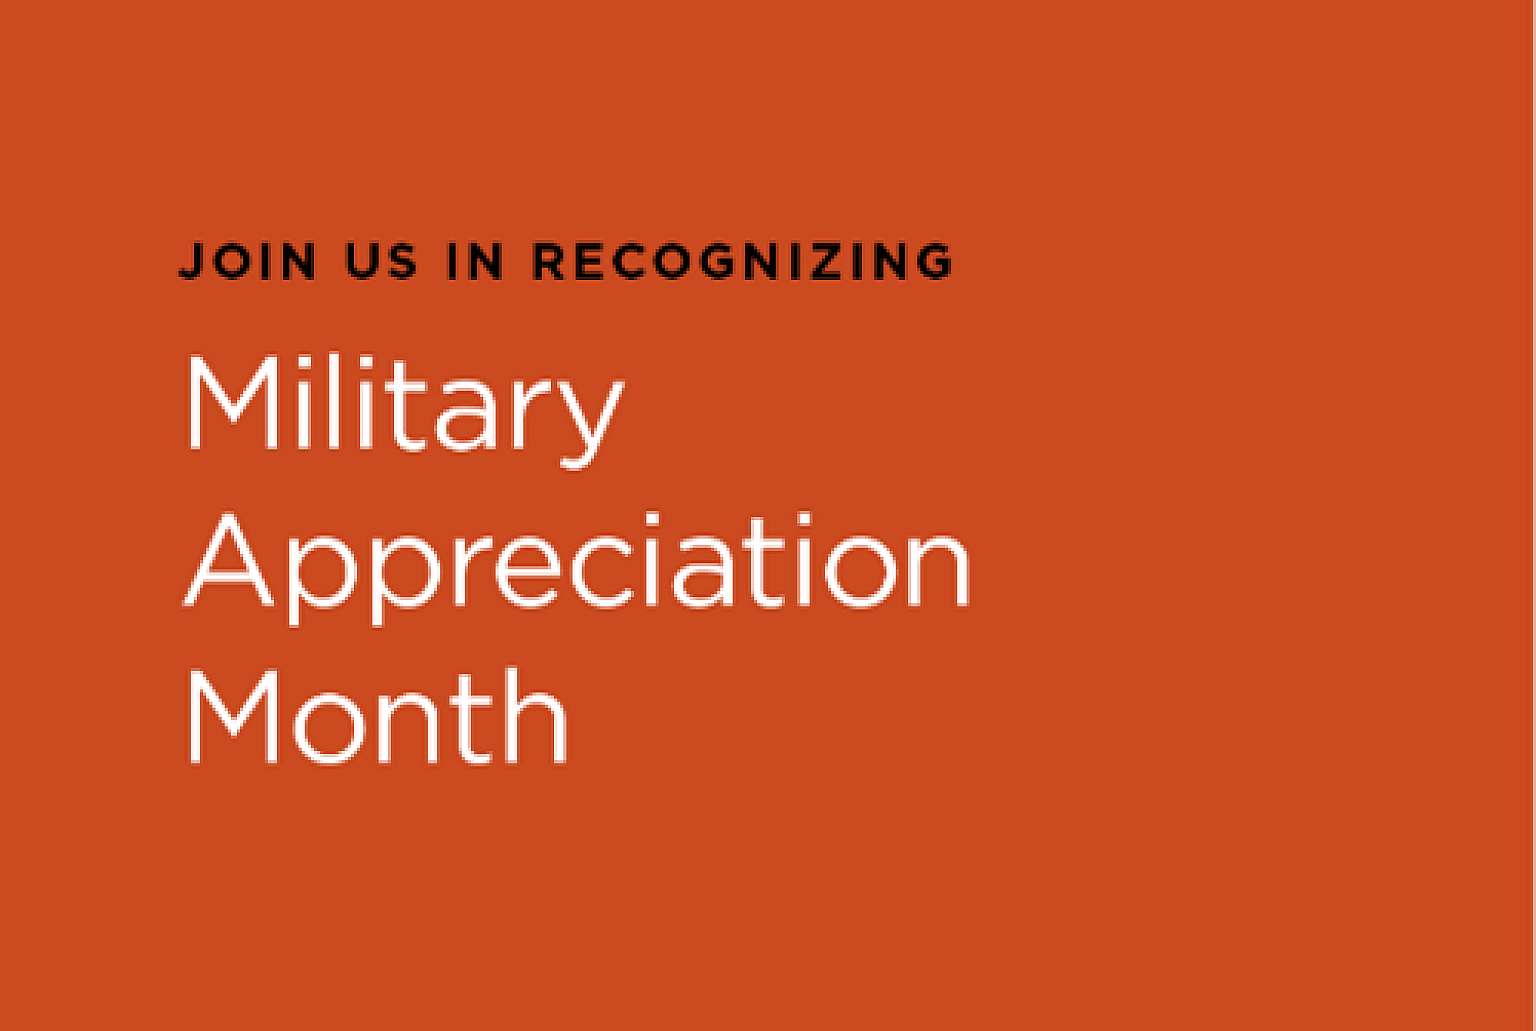 Military appreciation